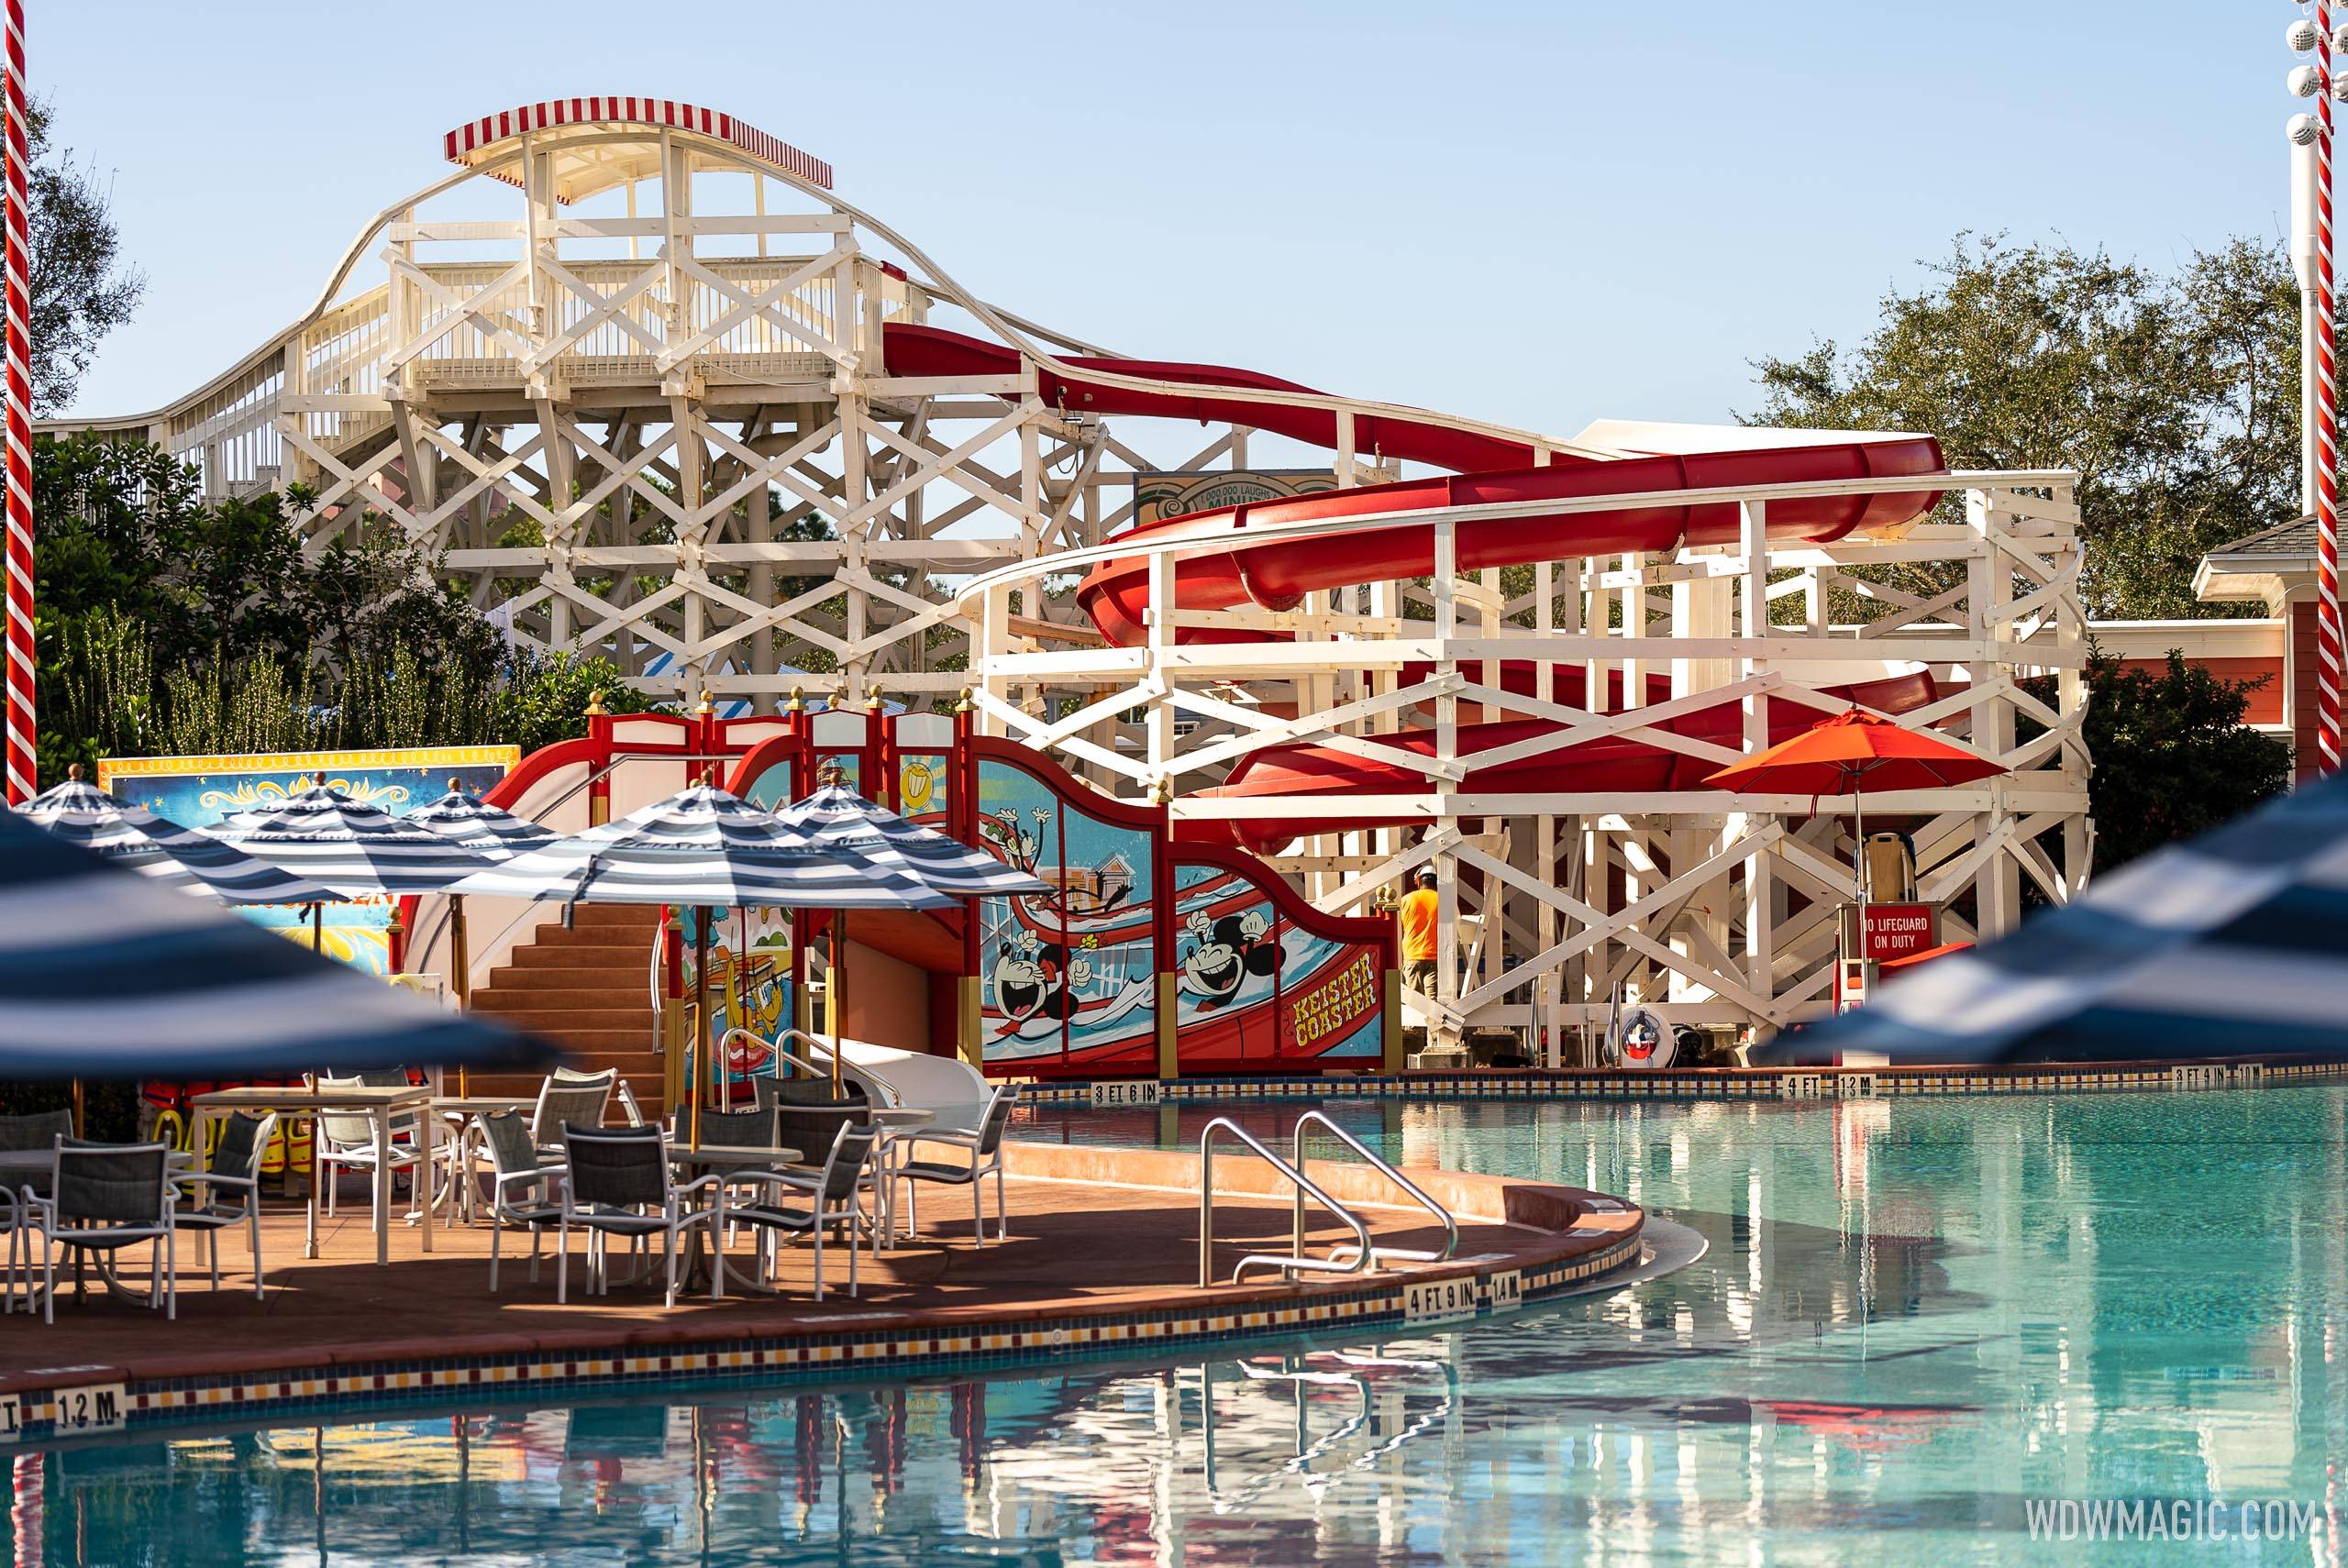 Luna Park Pool Slide closed for refurbishment